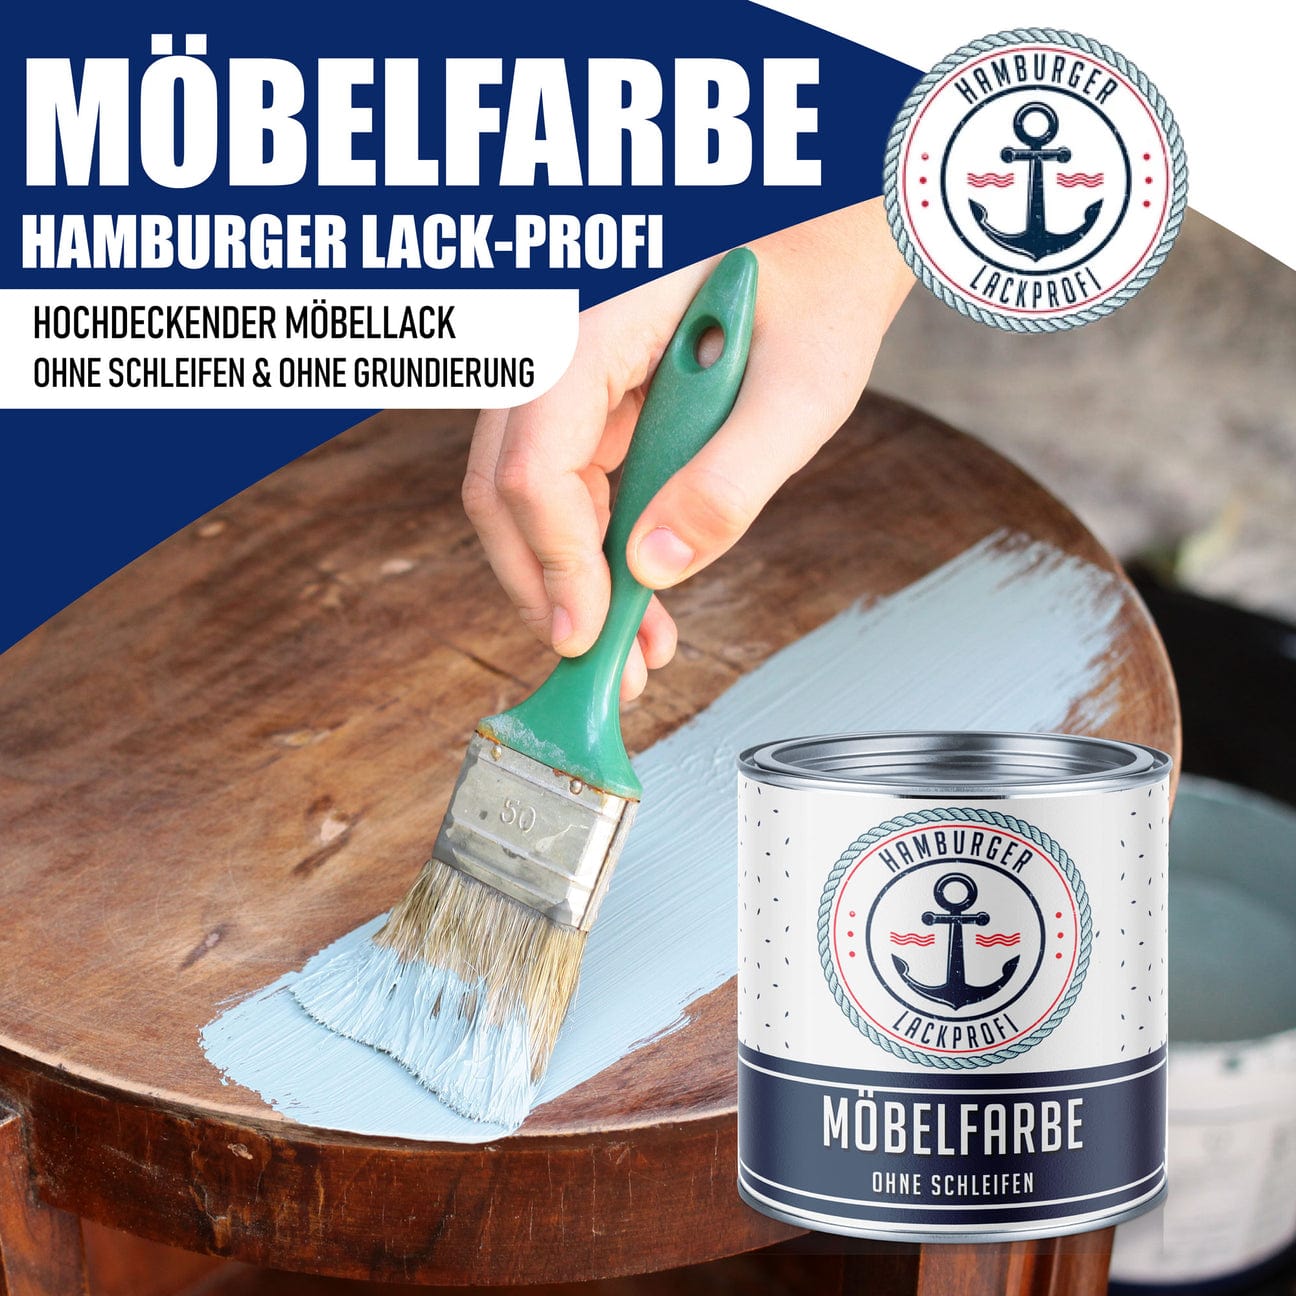 Hamburger Lack-Profi Möbelfarbe ohne Schleifen RAL 5008 Graublau - Möbellack Hamburger Lack-Profi